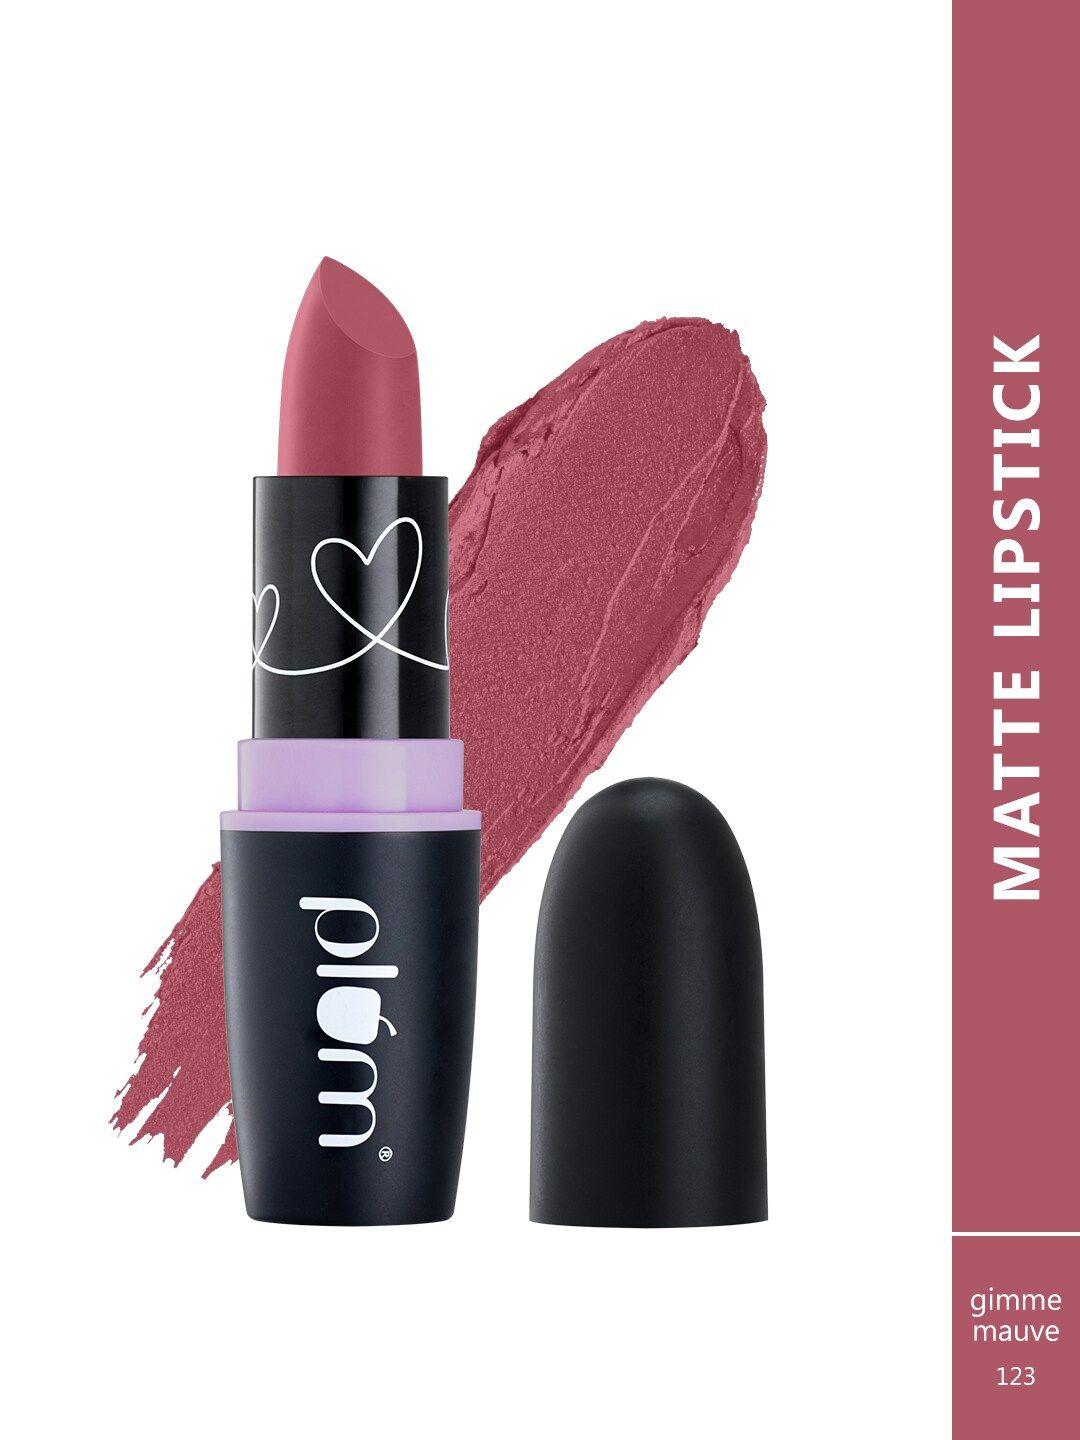 plum matterrific highly pigmented non-drying vegan lipstick with vit e - gimme mauve 123